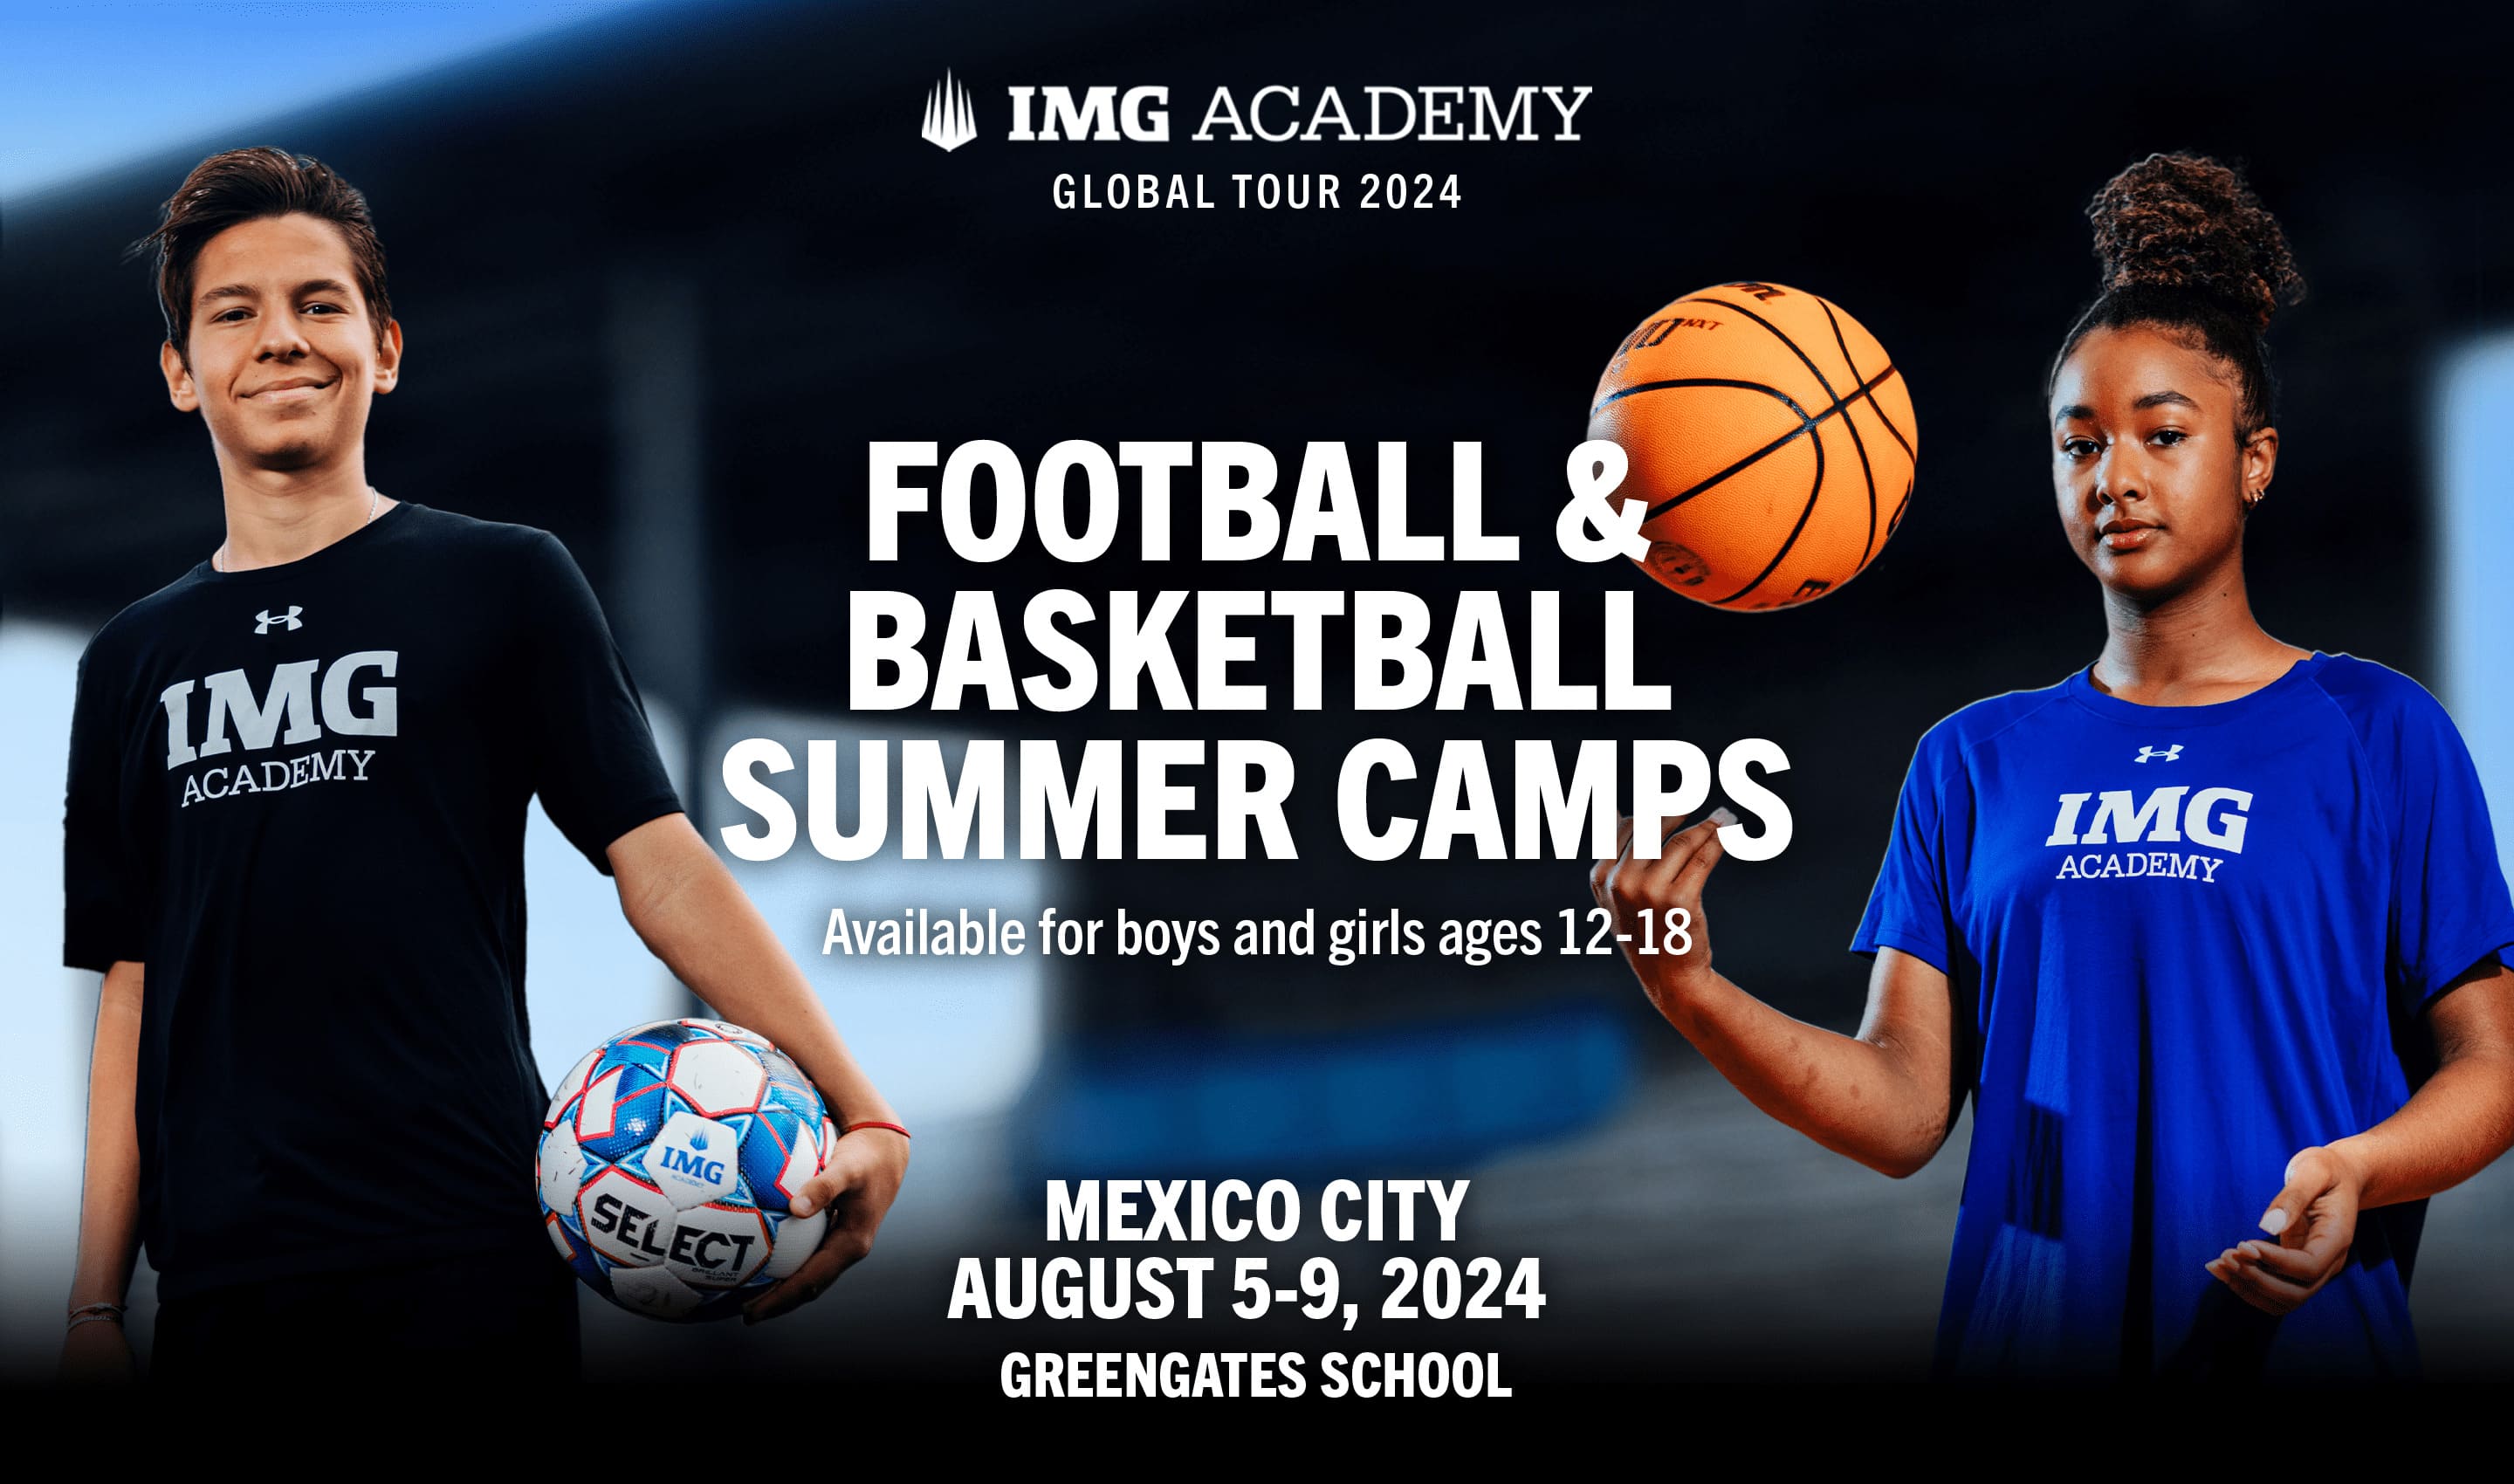 Football & Basketball Summer Camps - Football and Basketball Summer Camps